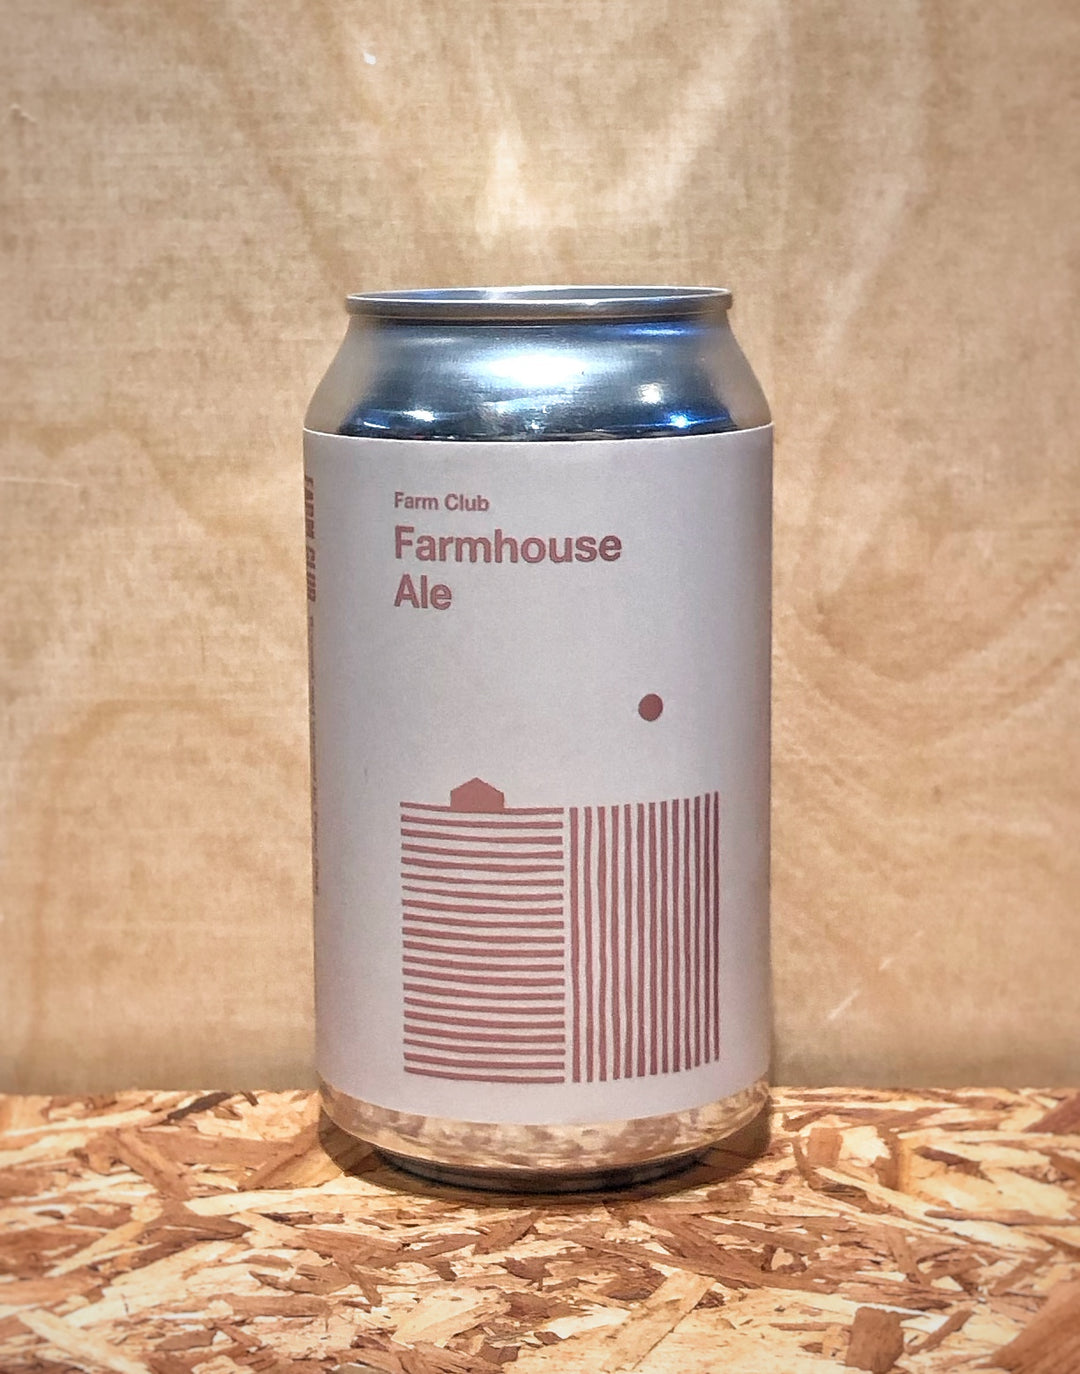 Farm Club Farmhouse Ale (Traverse City, MI)